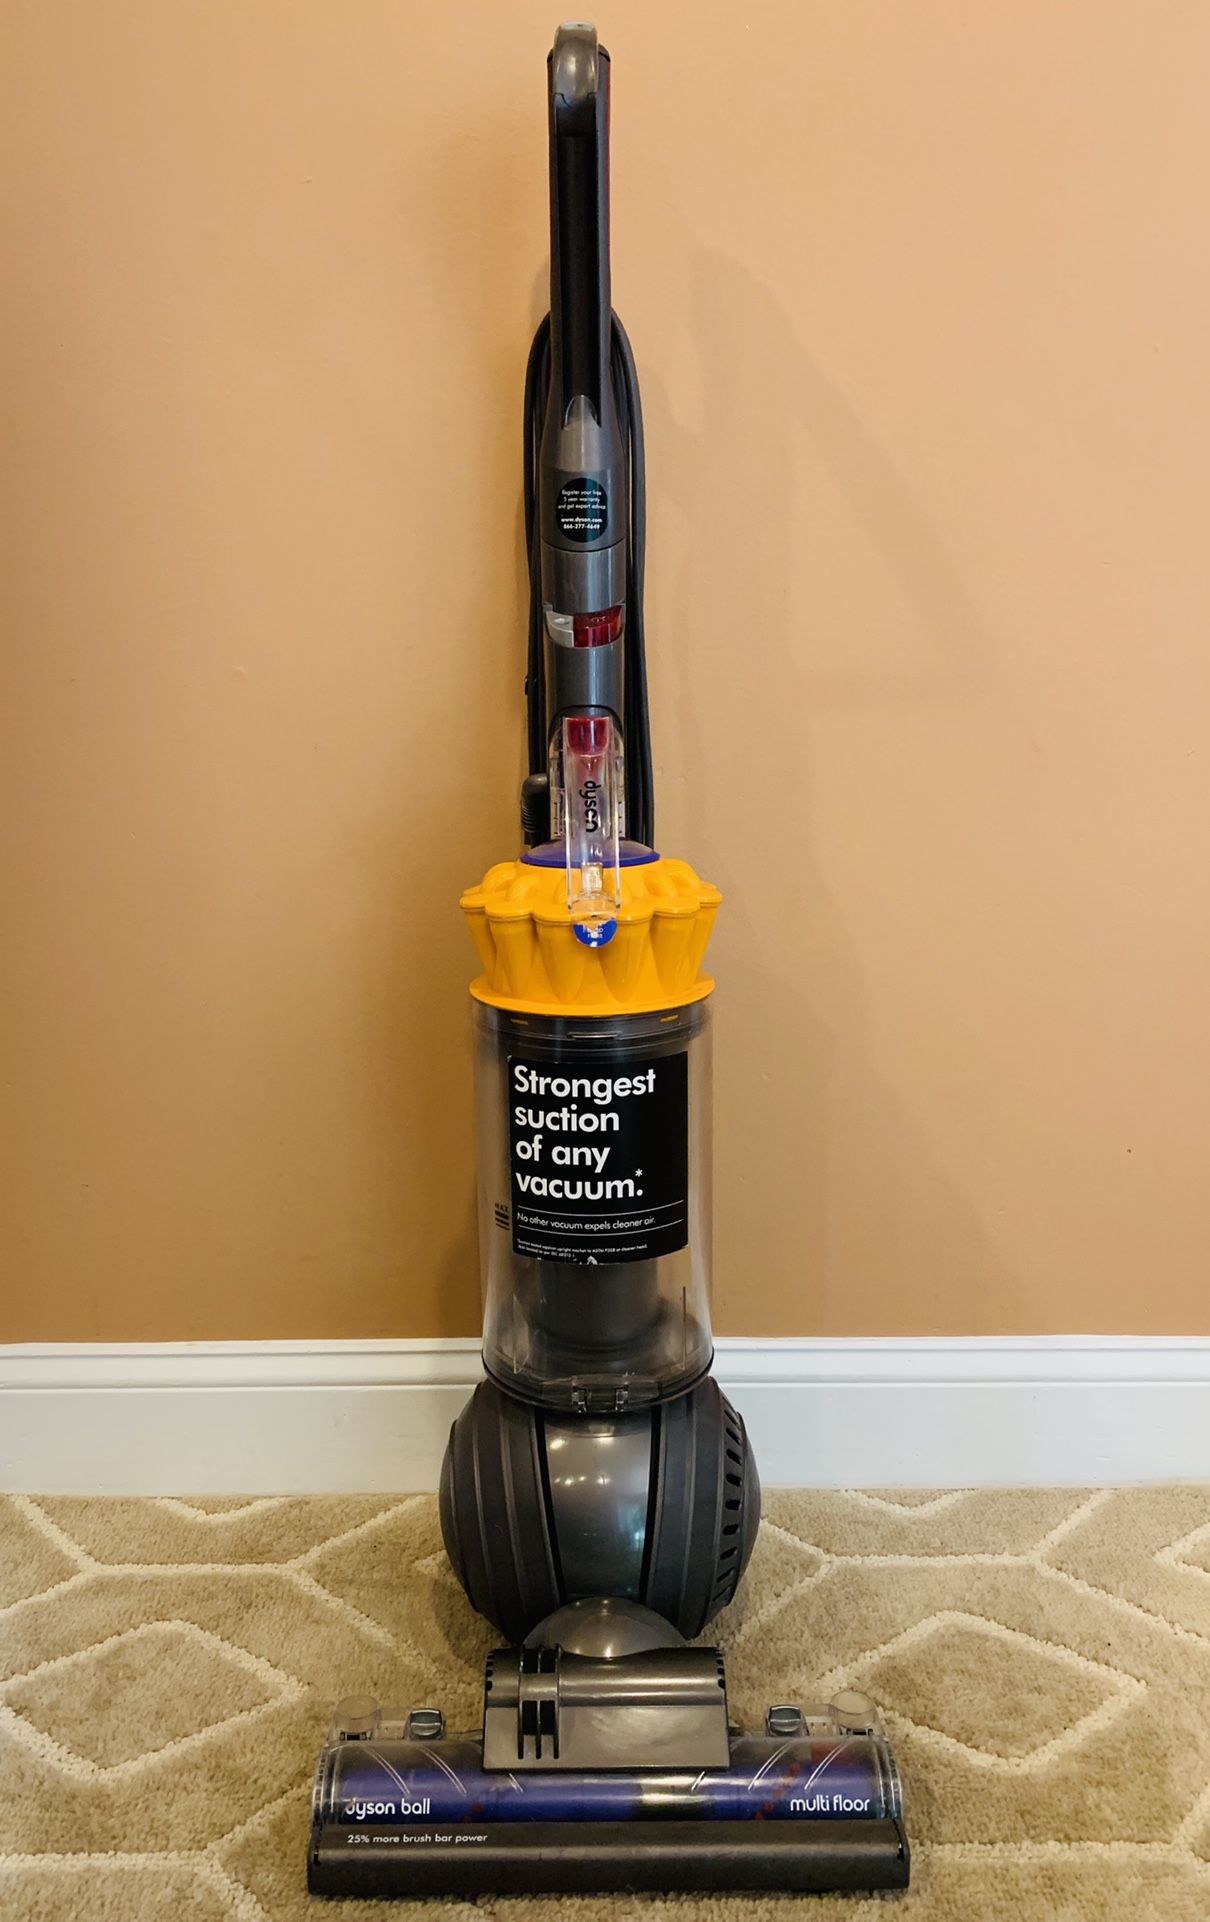 Dyson DC 65 vacuum cleaner